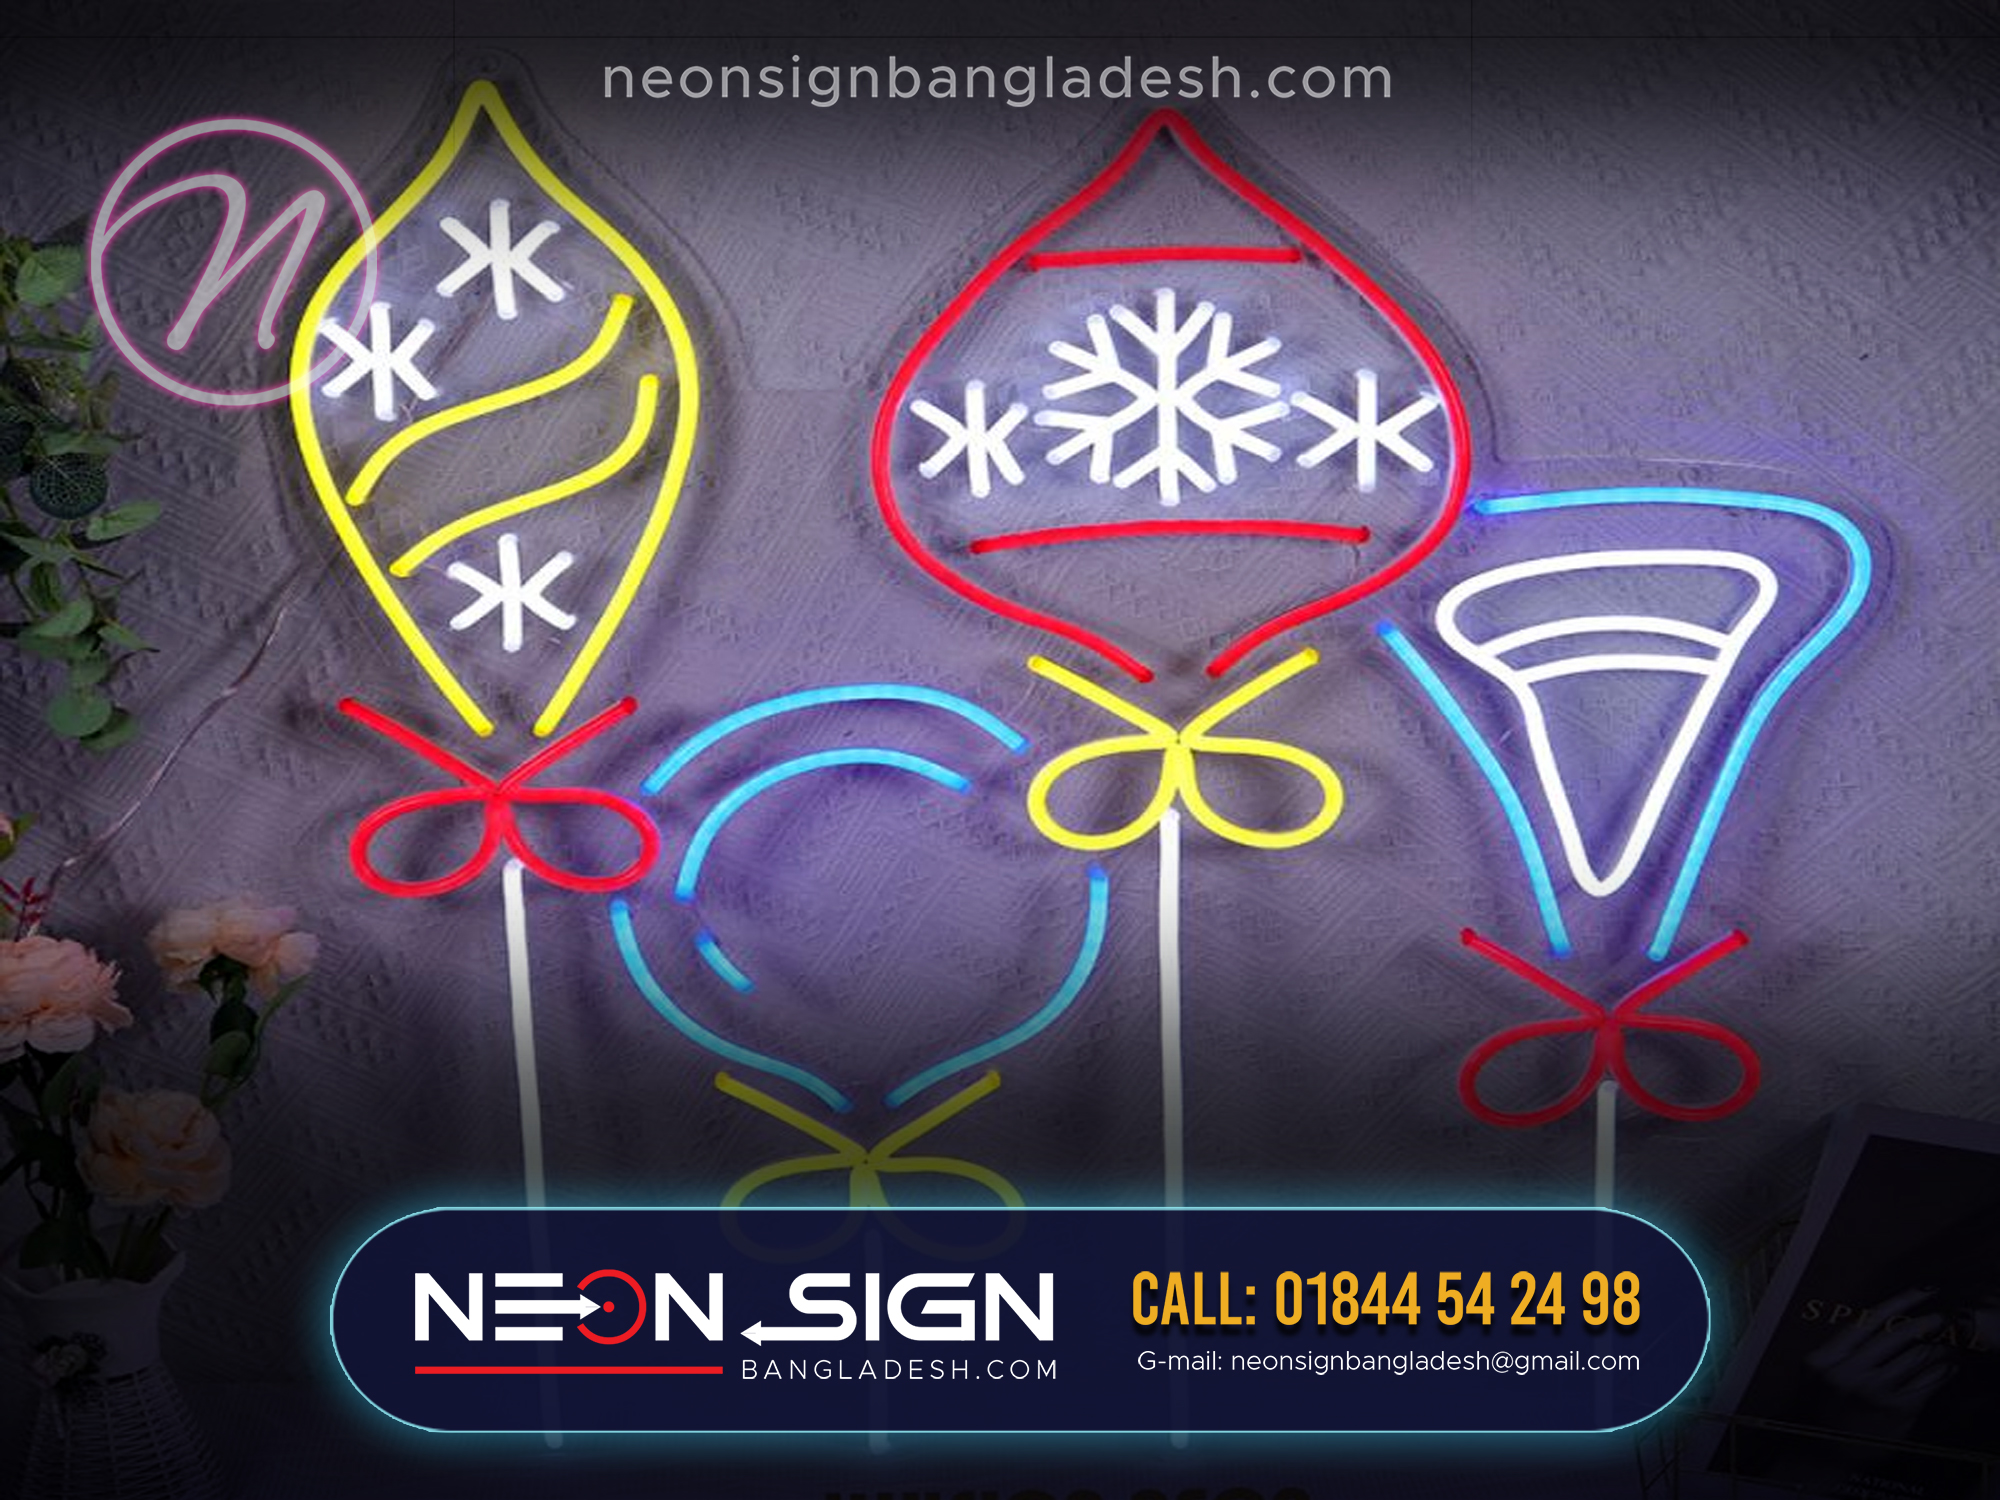 Neon art bd app led neon light price in bd neon sign board bd neon flexible strip light price in bangladesh led sign bd led sign board price in bangladesh neon lights acrylic sign board price in bangladesh